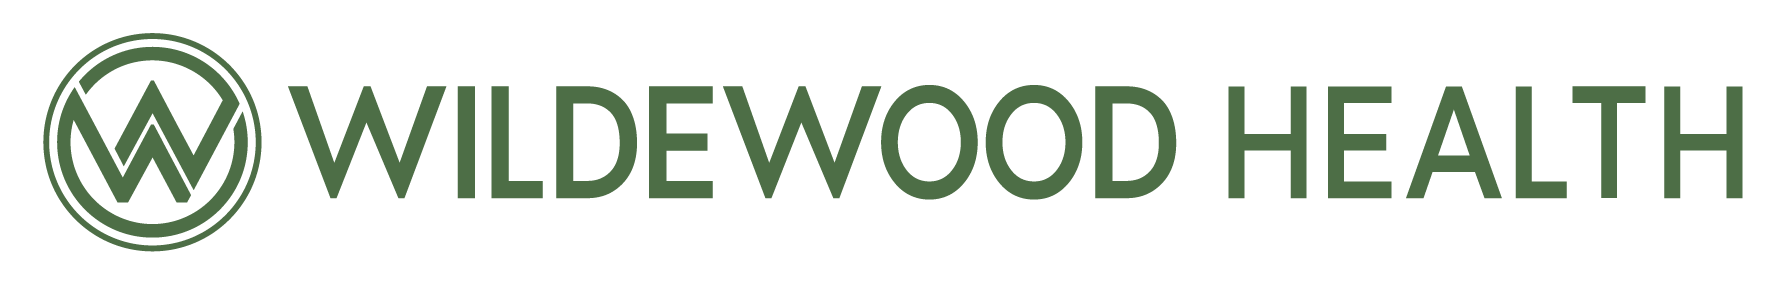 Wildewood health logo and name